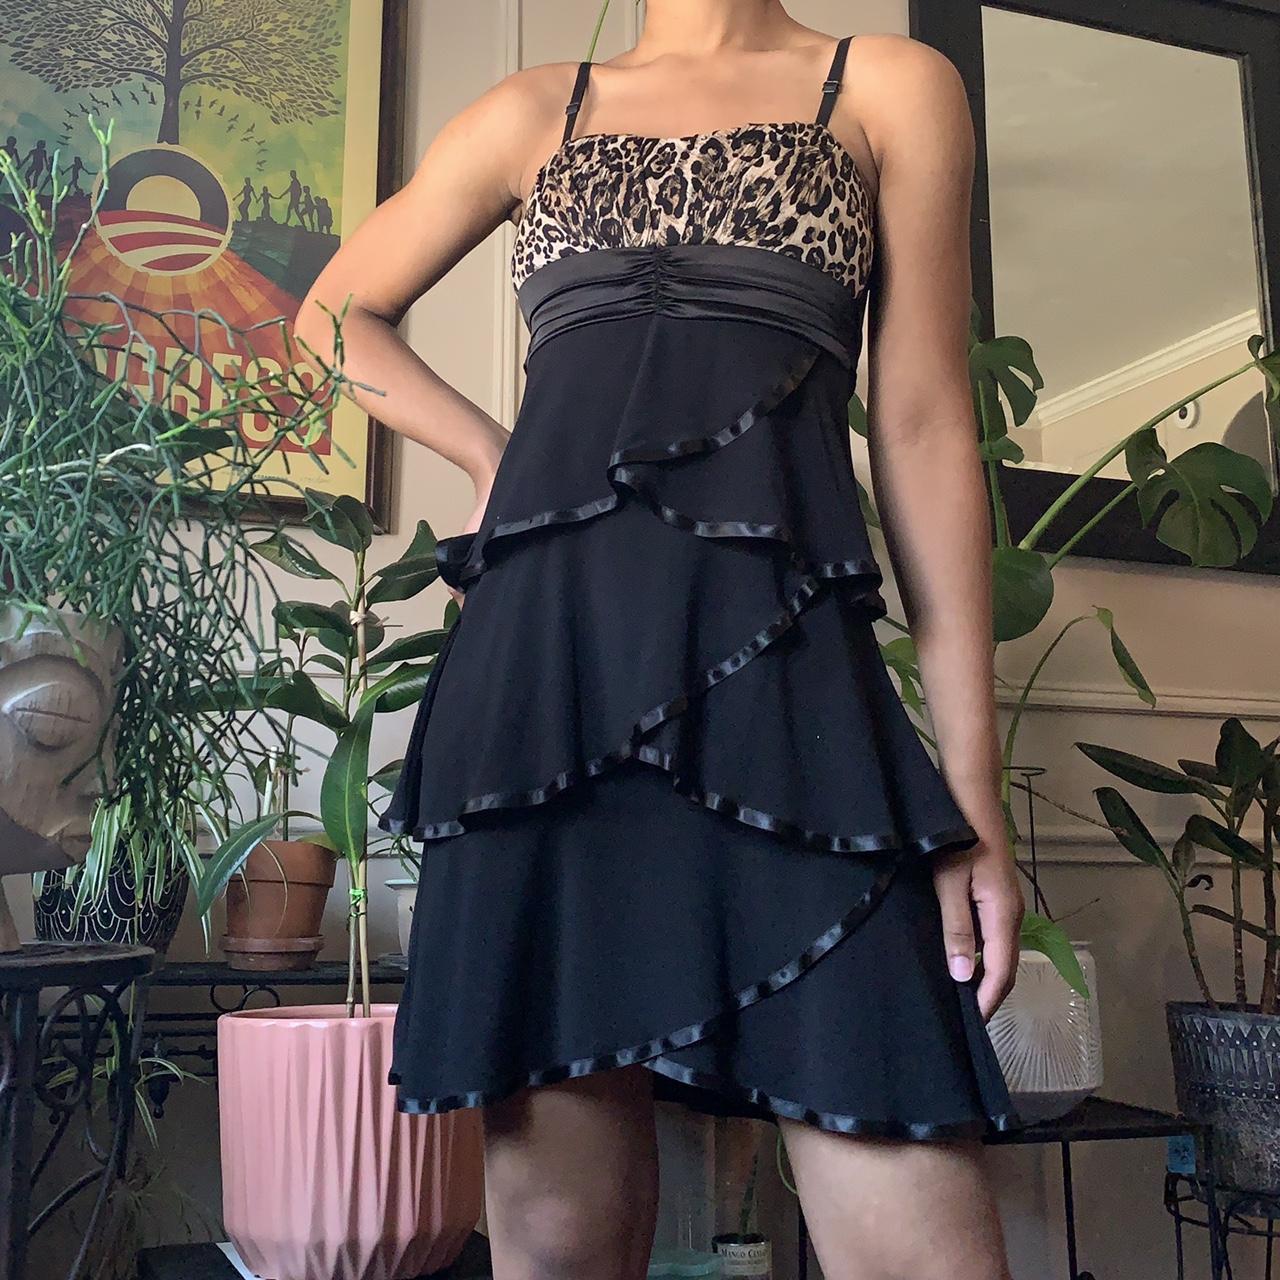 Product Image 1 - Black ruffled dress with cheetah